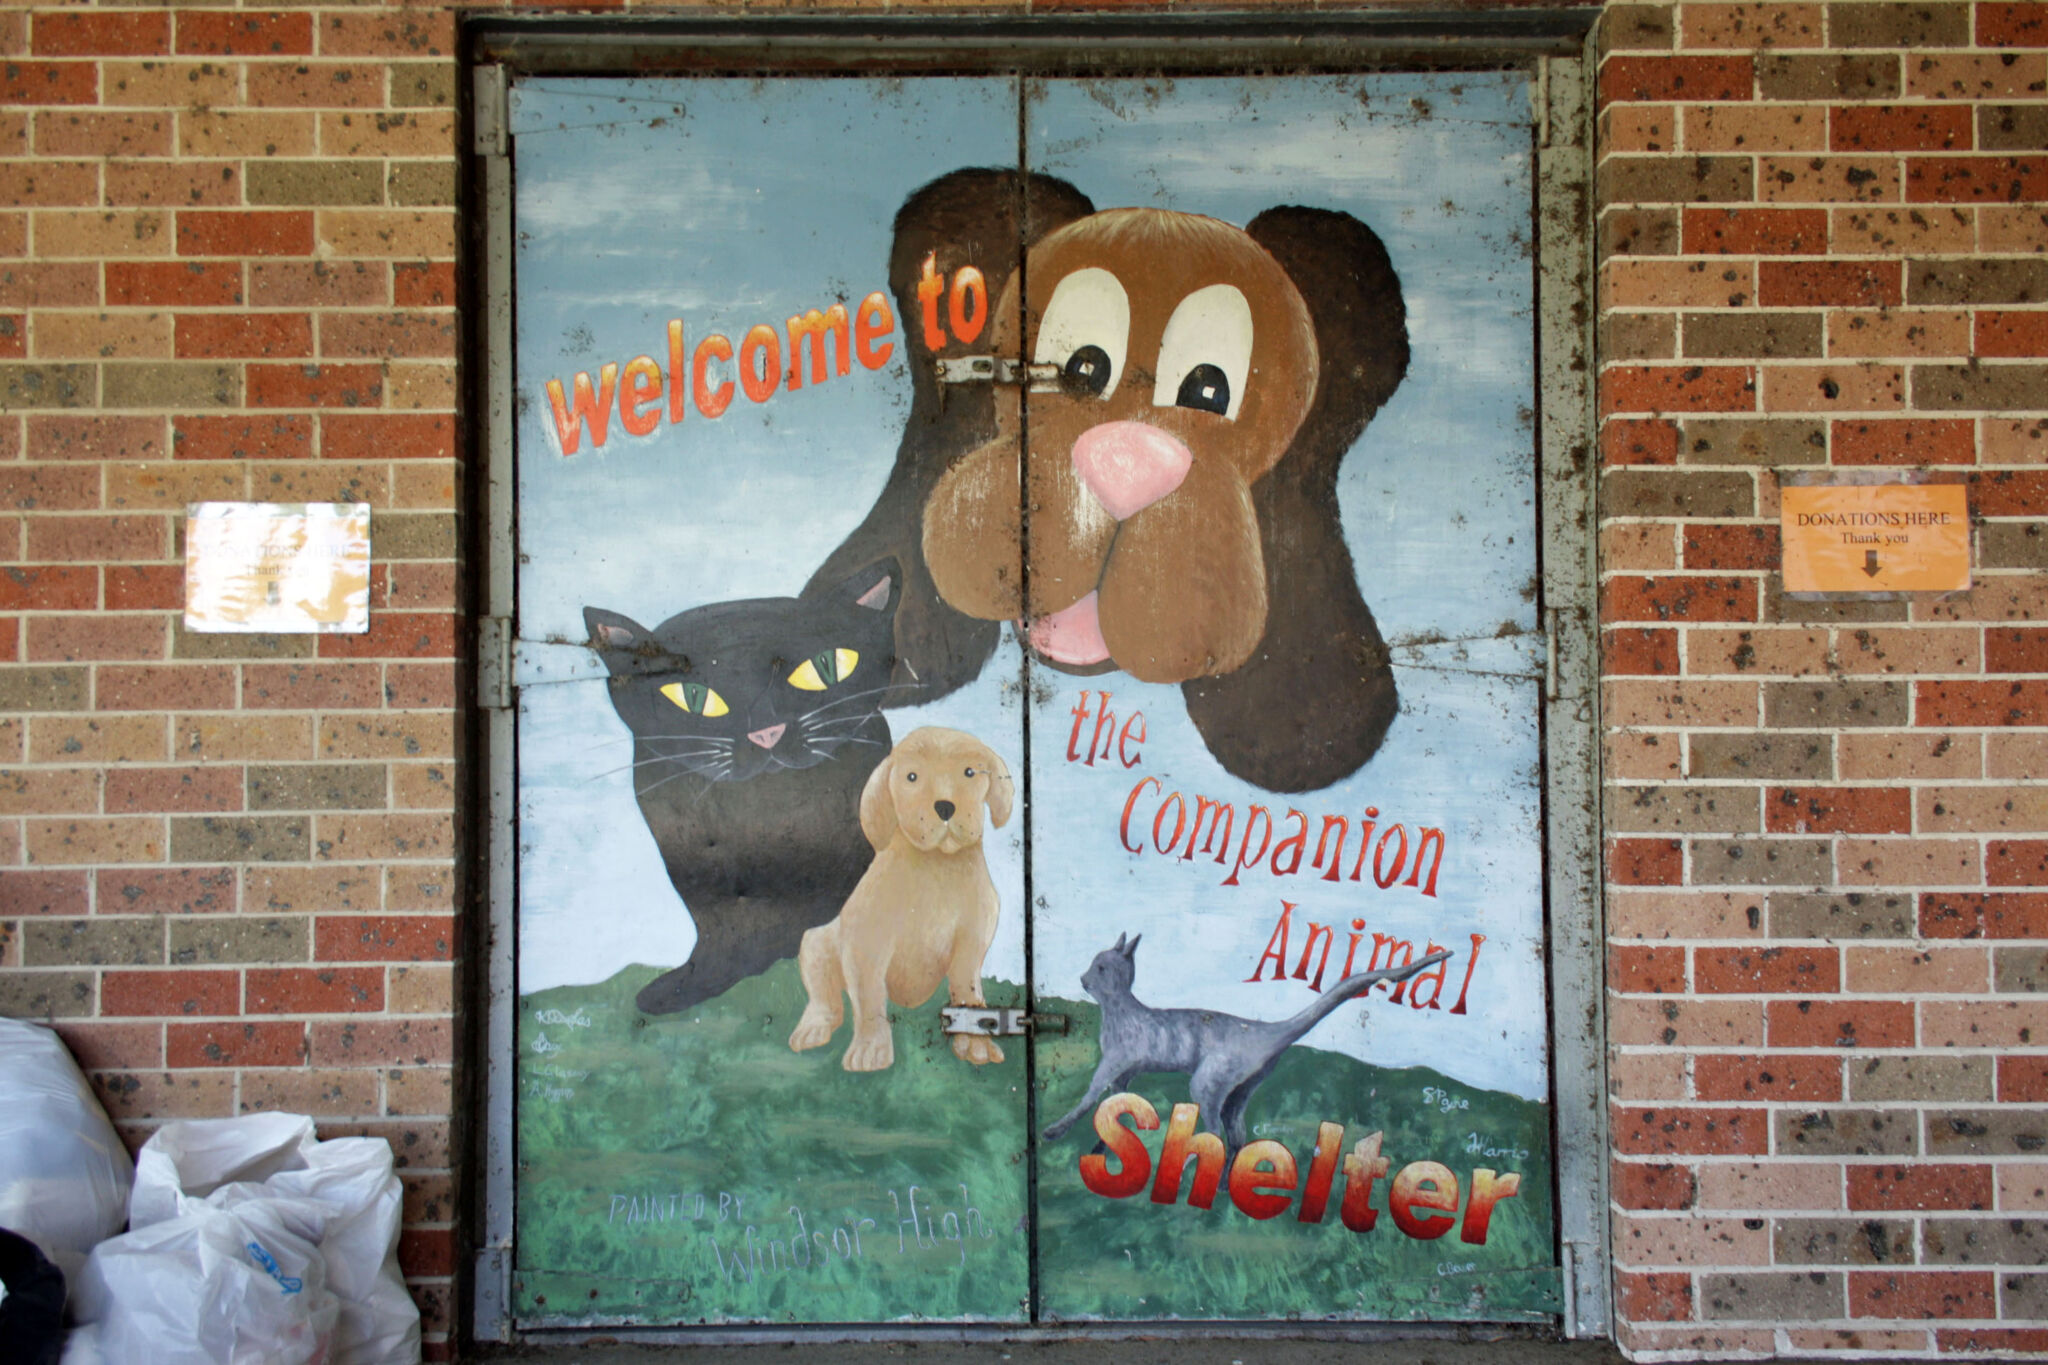 Windsor High School&mdash;Welcome to the Companion Animal Shelter